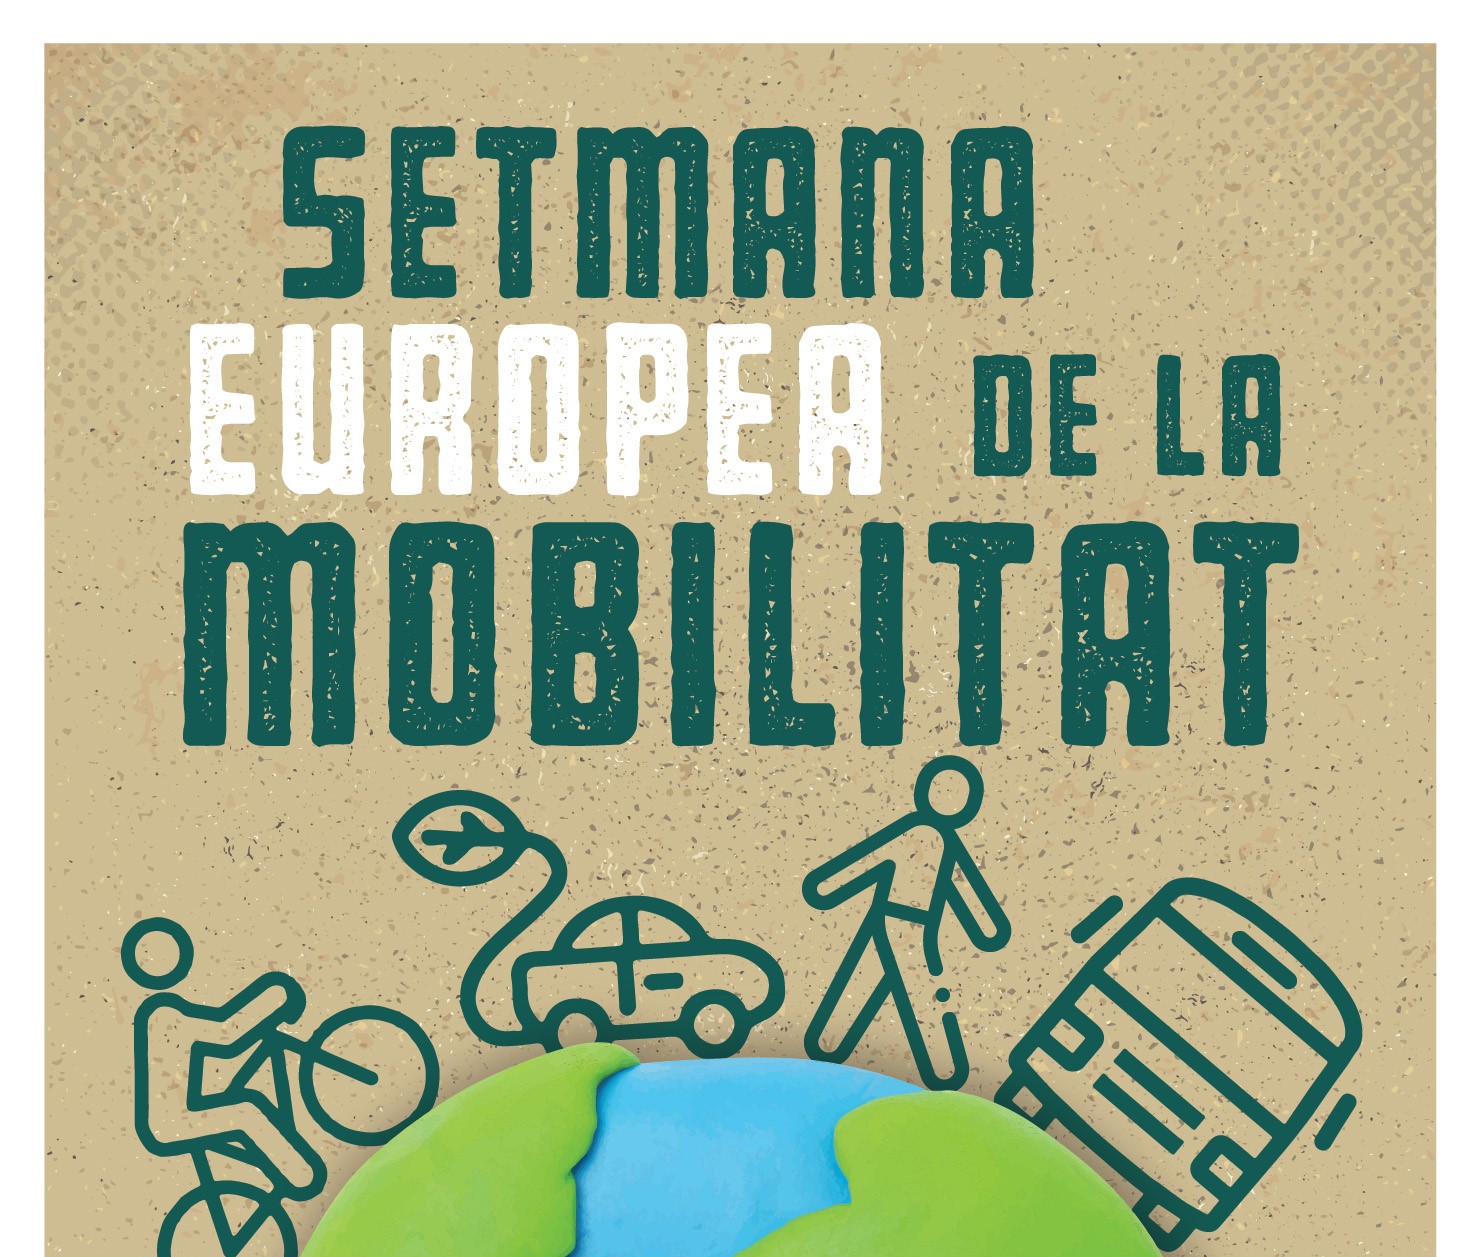 Salt celebra la Setmana Europea de la Mobilitat